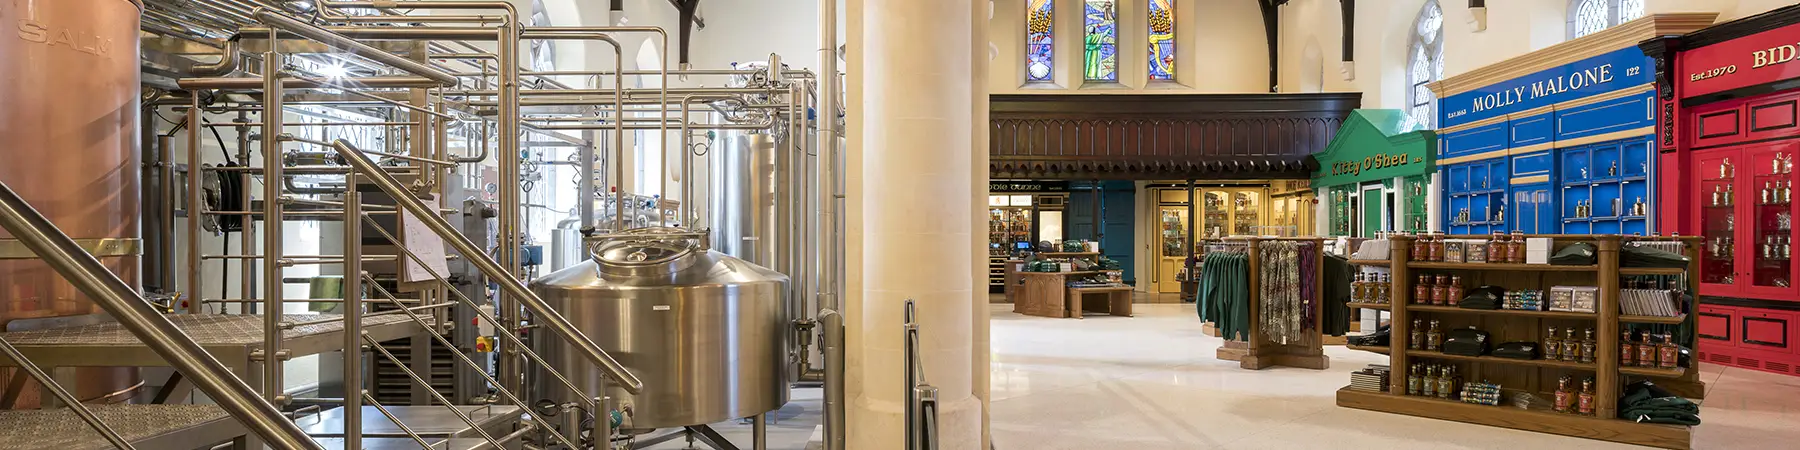 pearse lyons distillery brew house interior